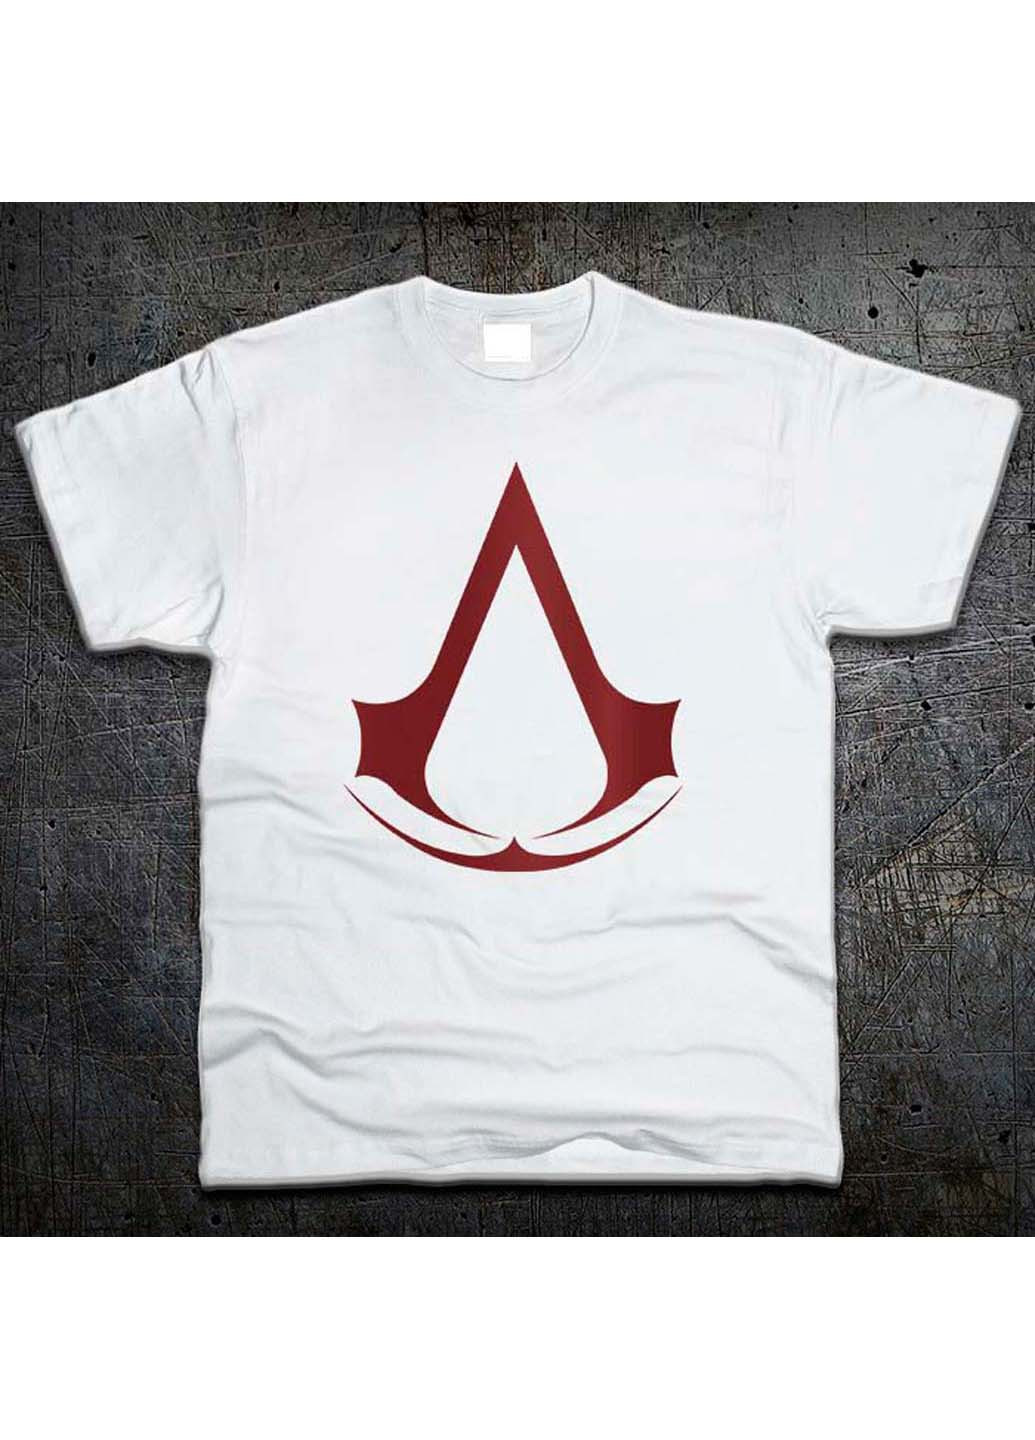 Белая футболка Fruit of the Loom Лого Кредо Ассасина Logo Assassins Creed